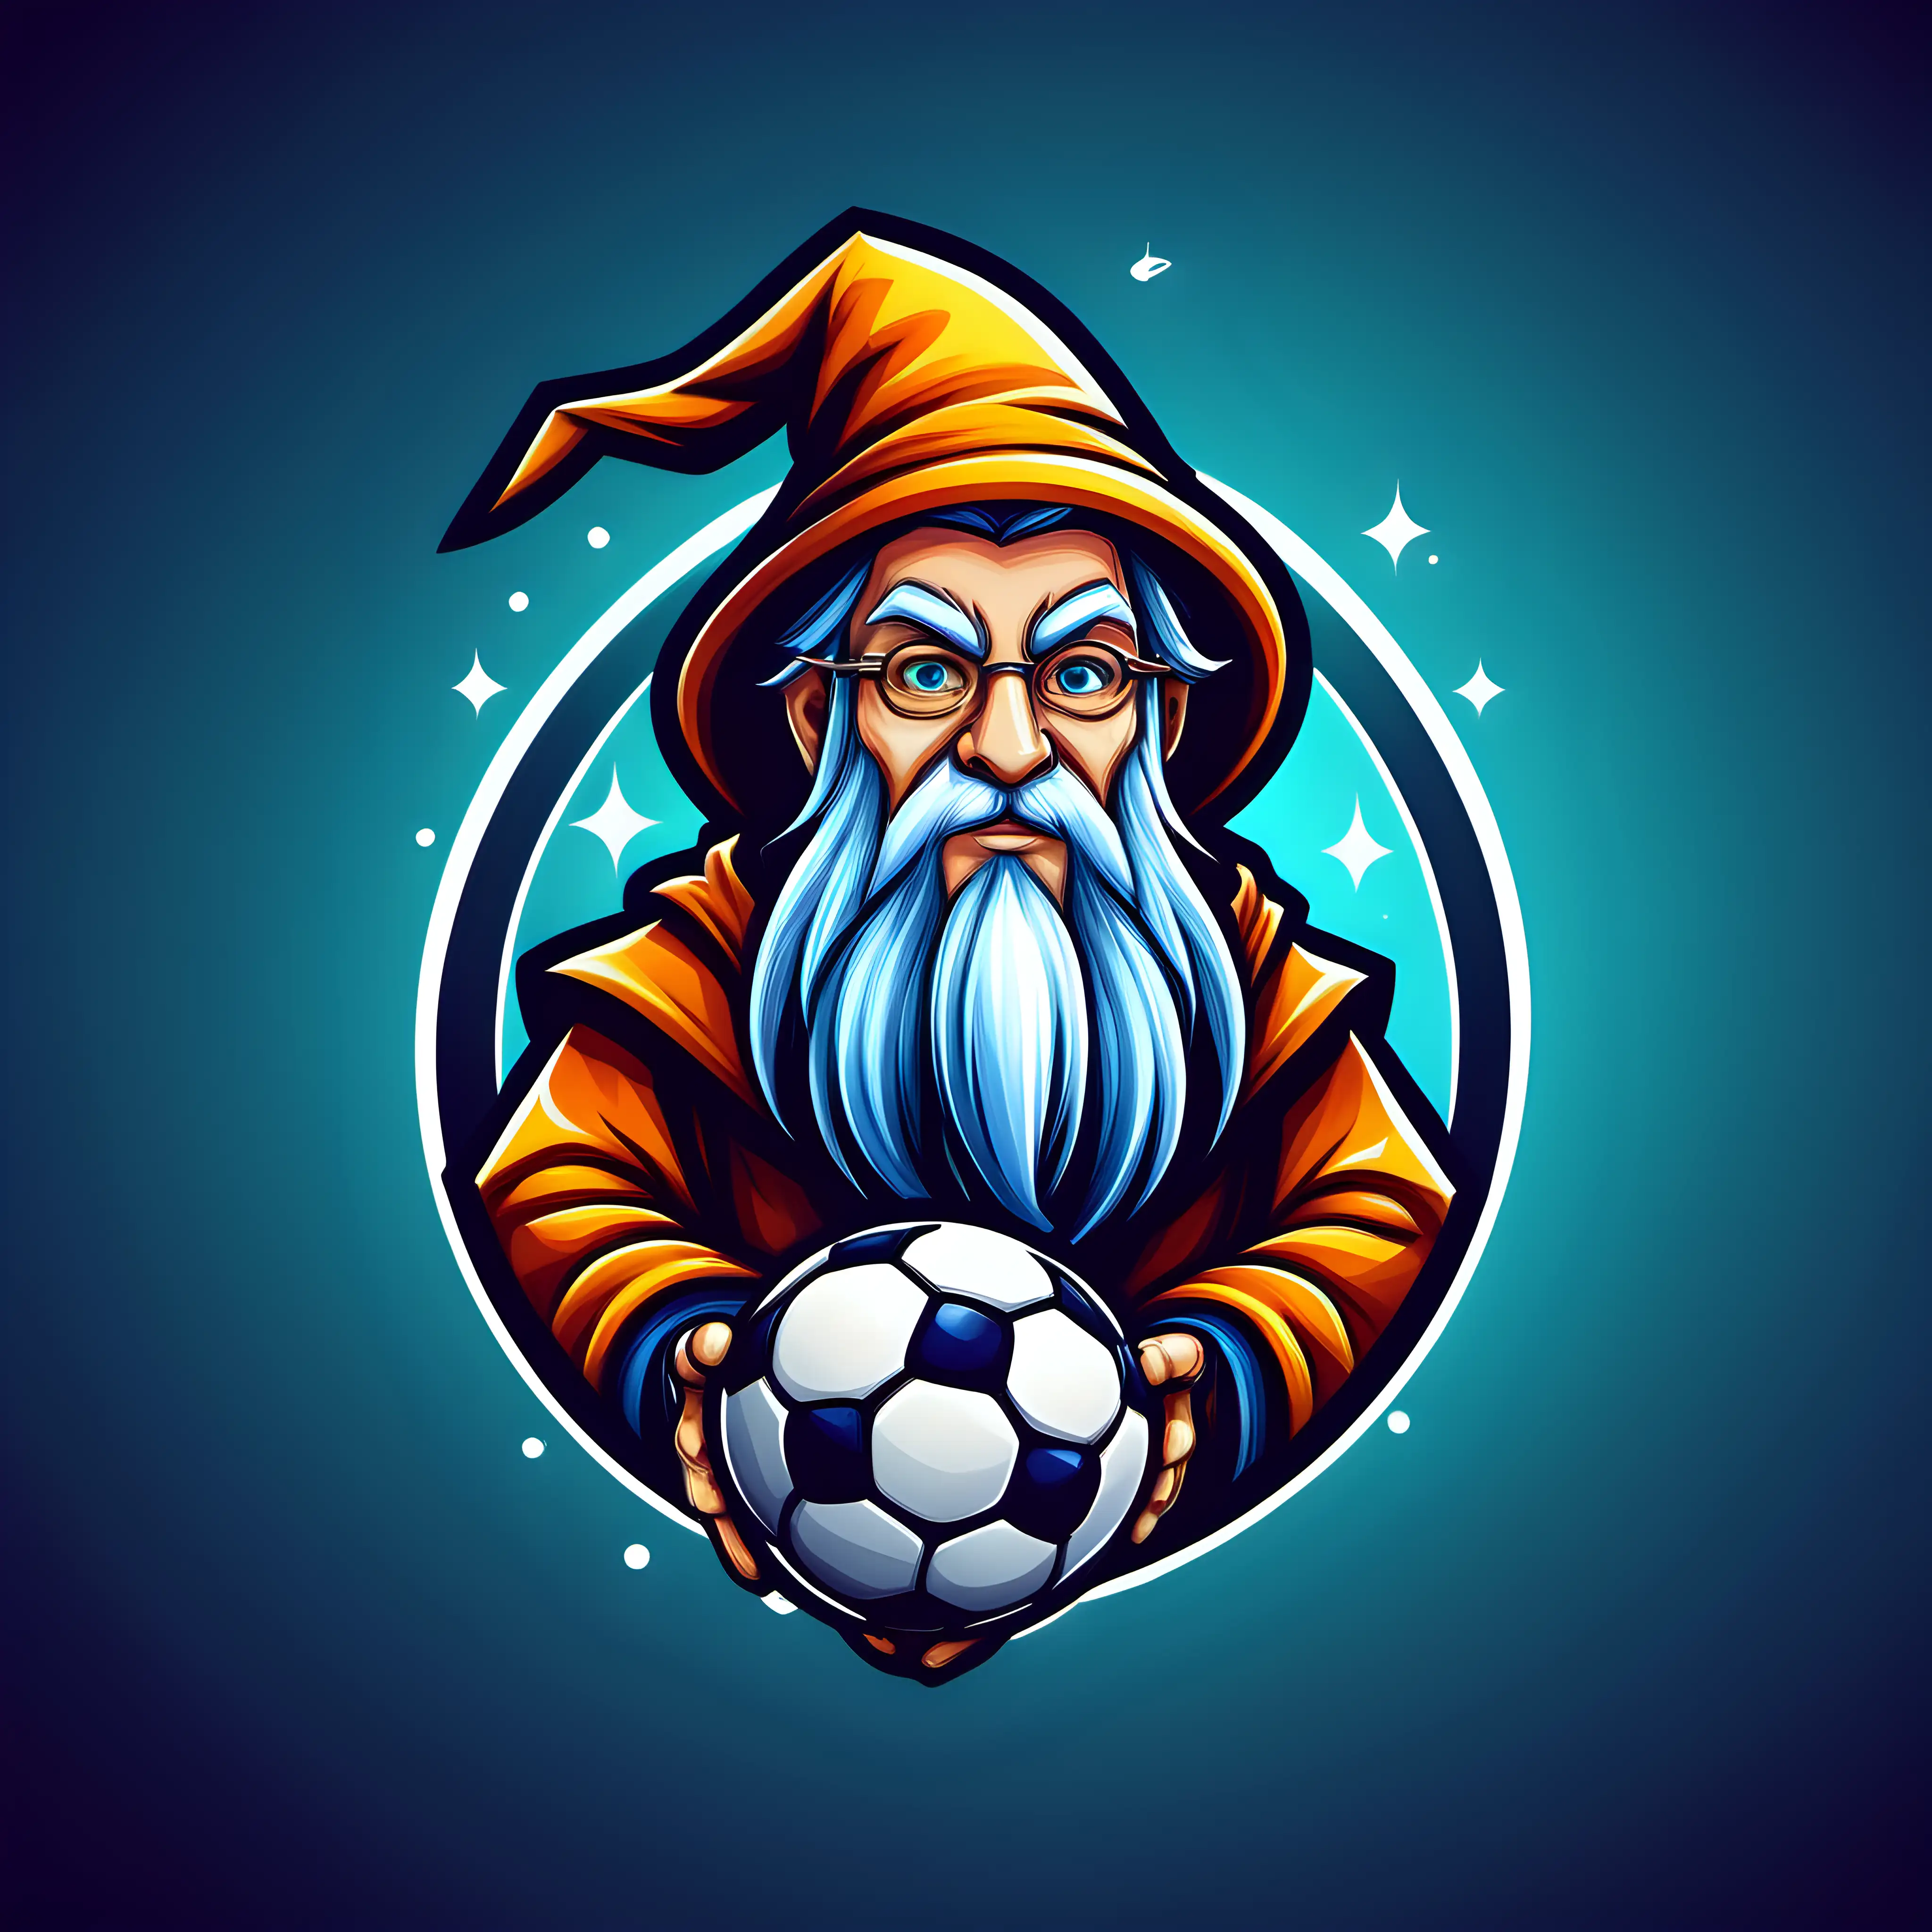 Wizard Vector Art & Graphics | freevector.com